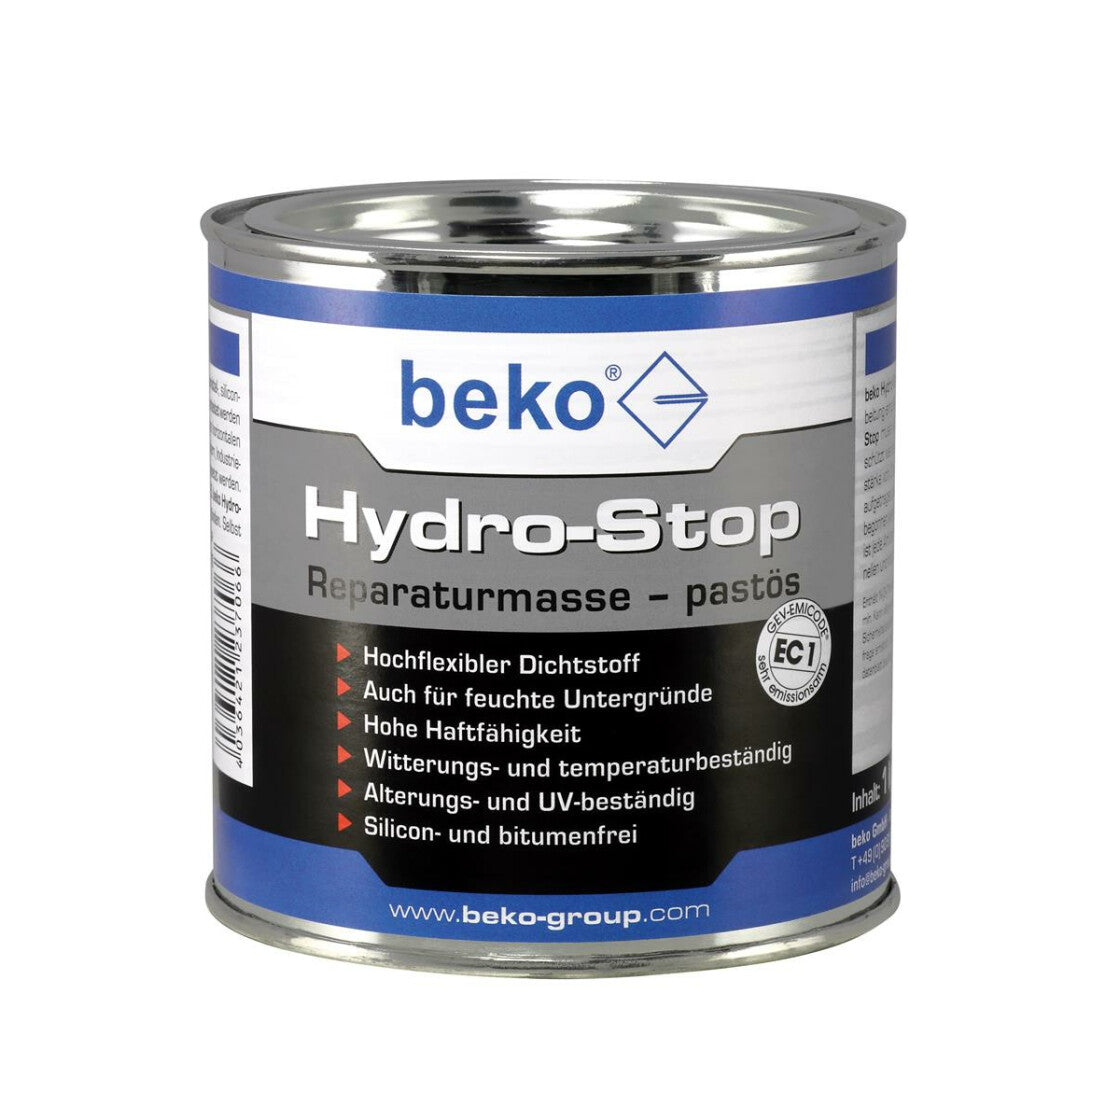 Hydro-Stop Reparaturmasse pastös 1kg